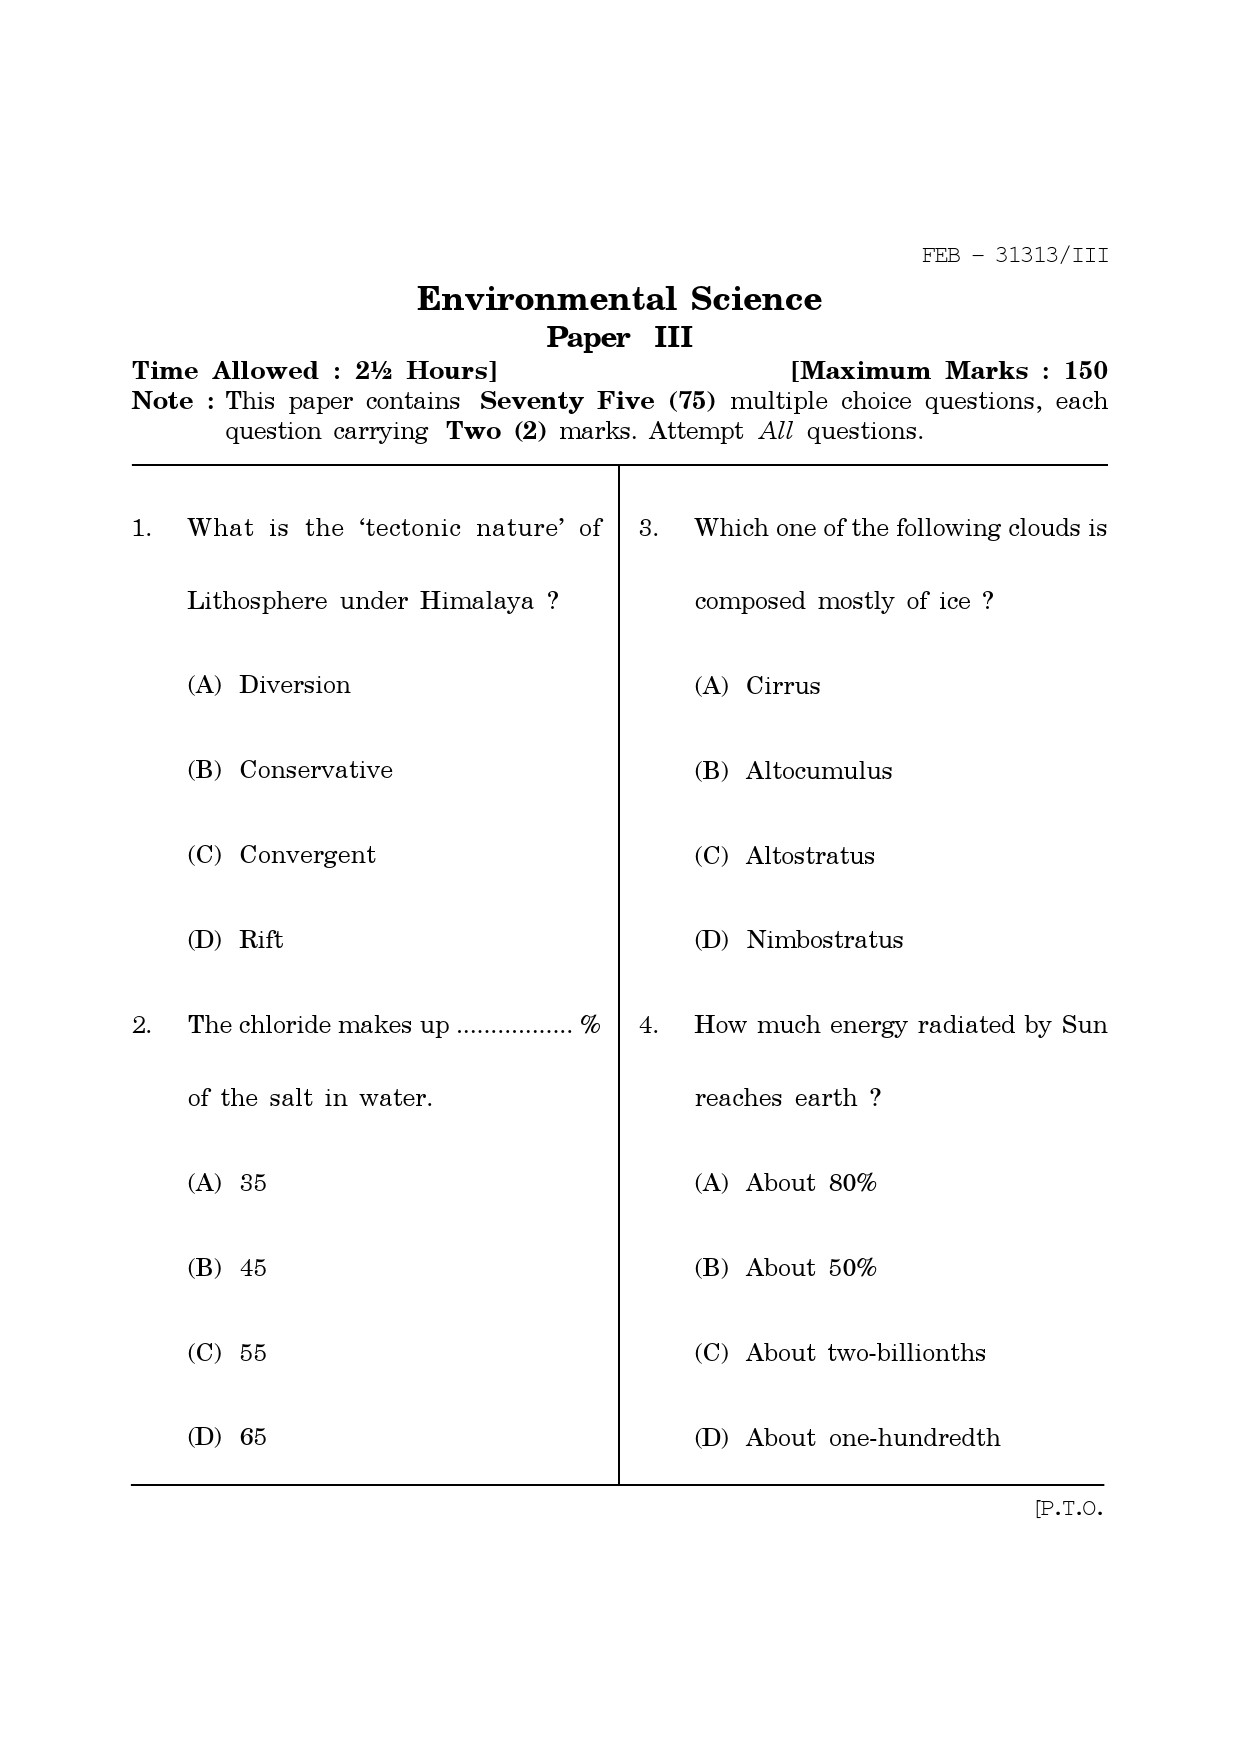 Maharashtra SET Environmental Sciences Question Paper III February 2013 1